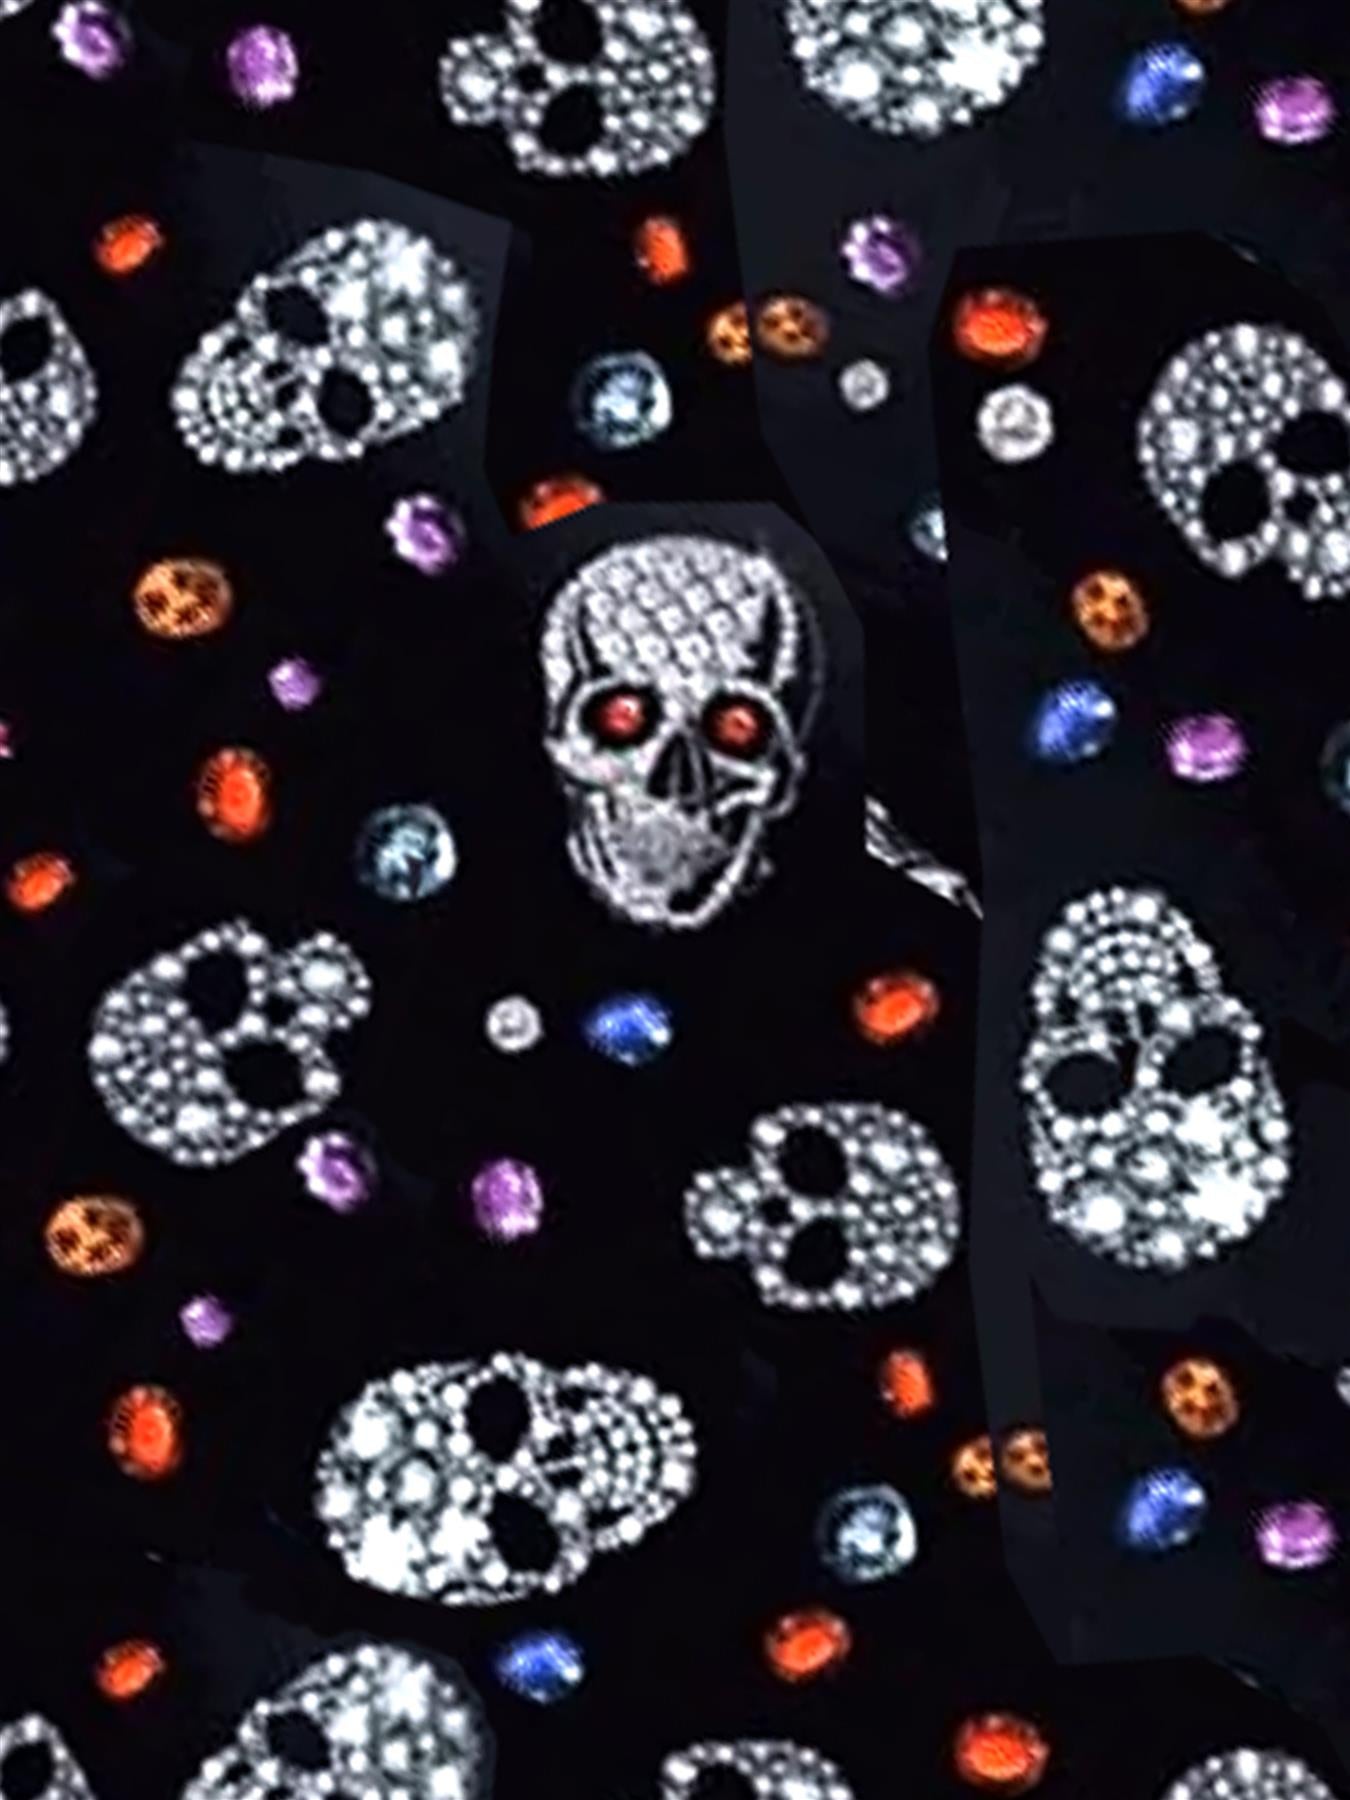 Sugar Skulls Print Halloween Dress